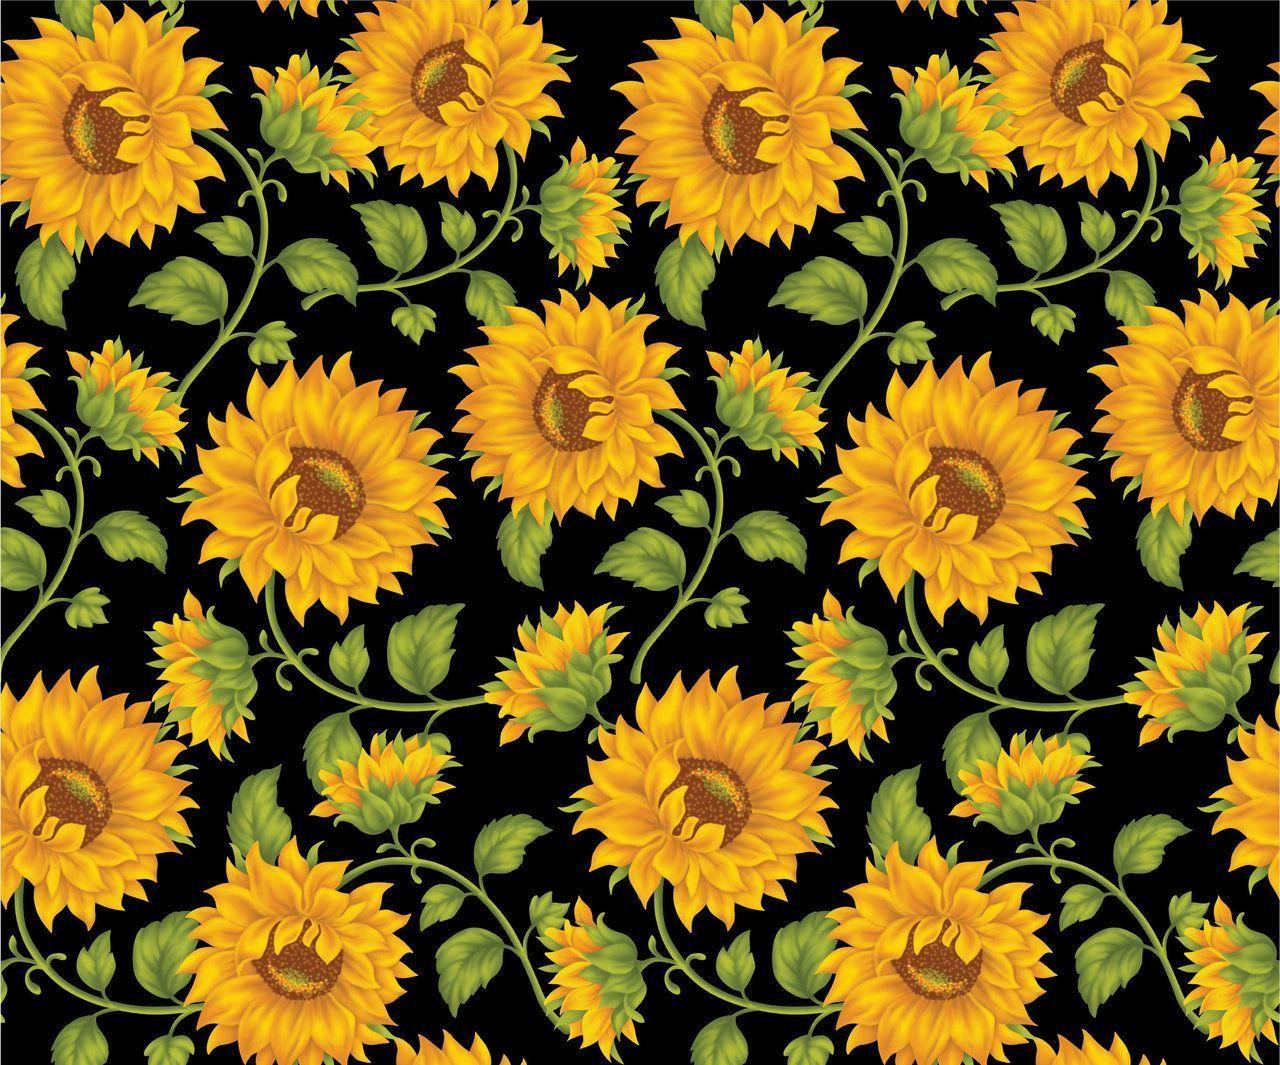 Sunflower Background Images  Free Download on Freepik